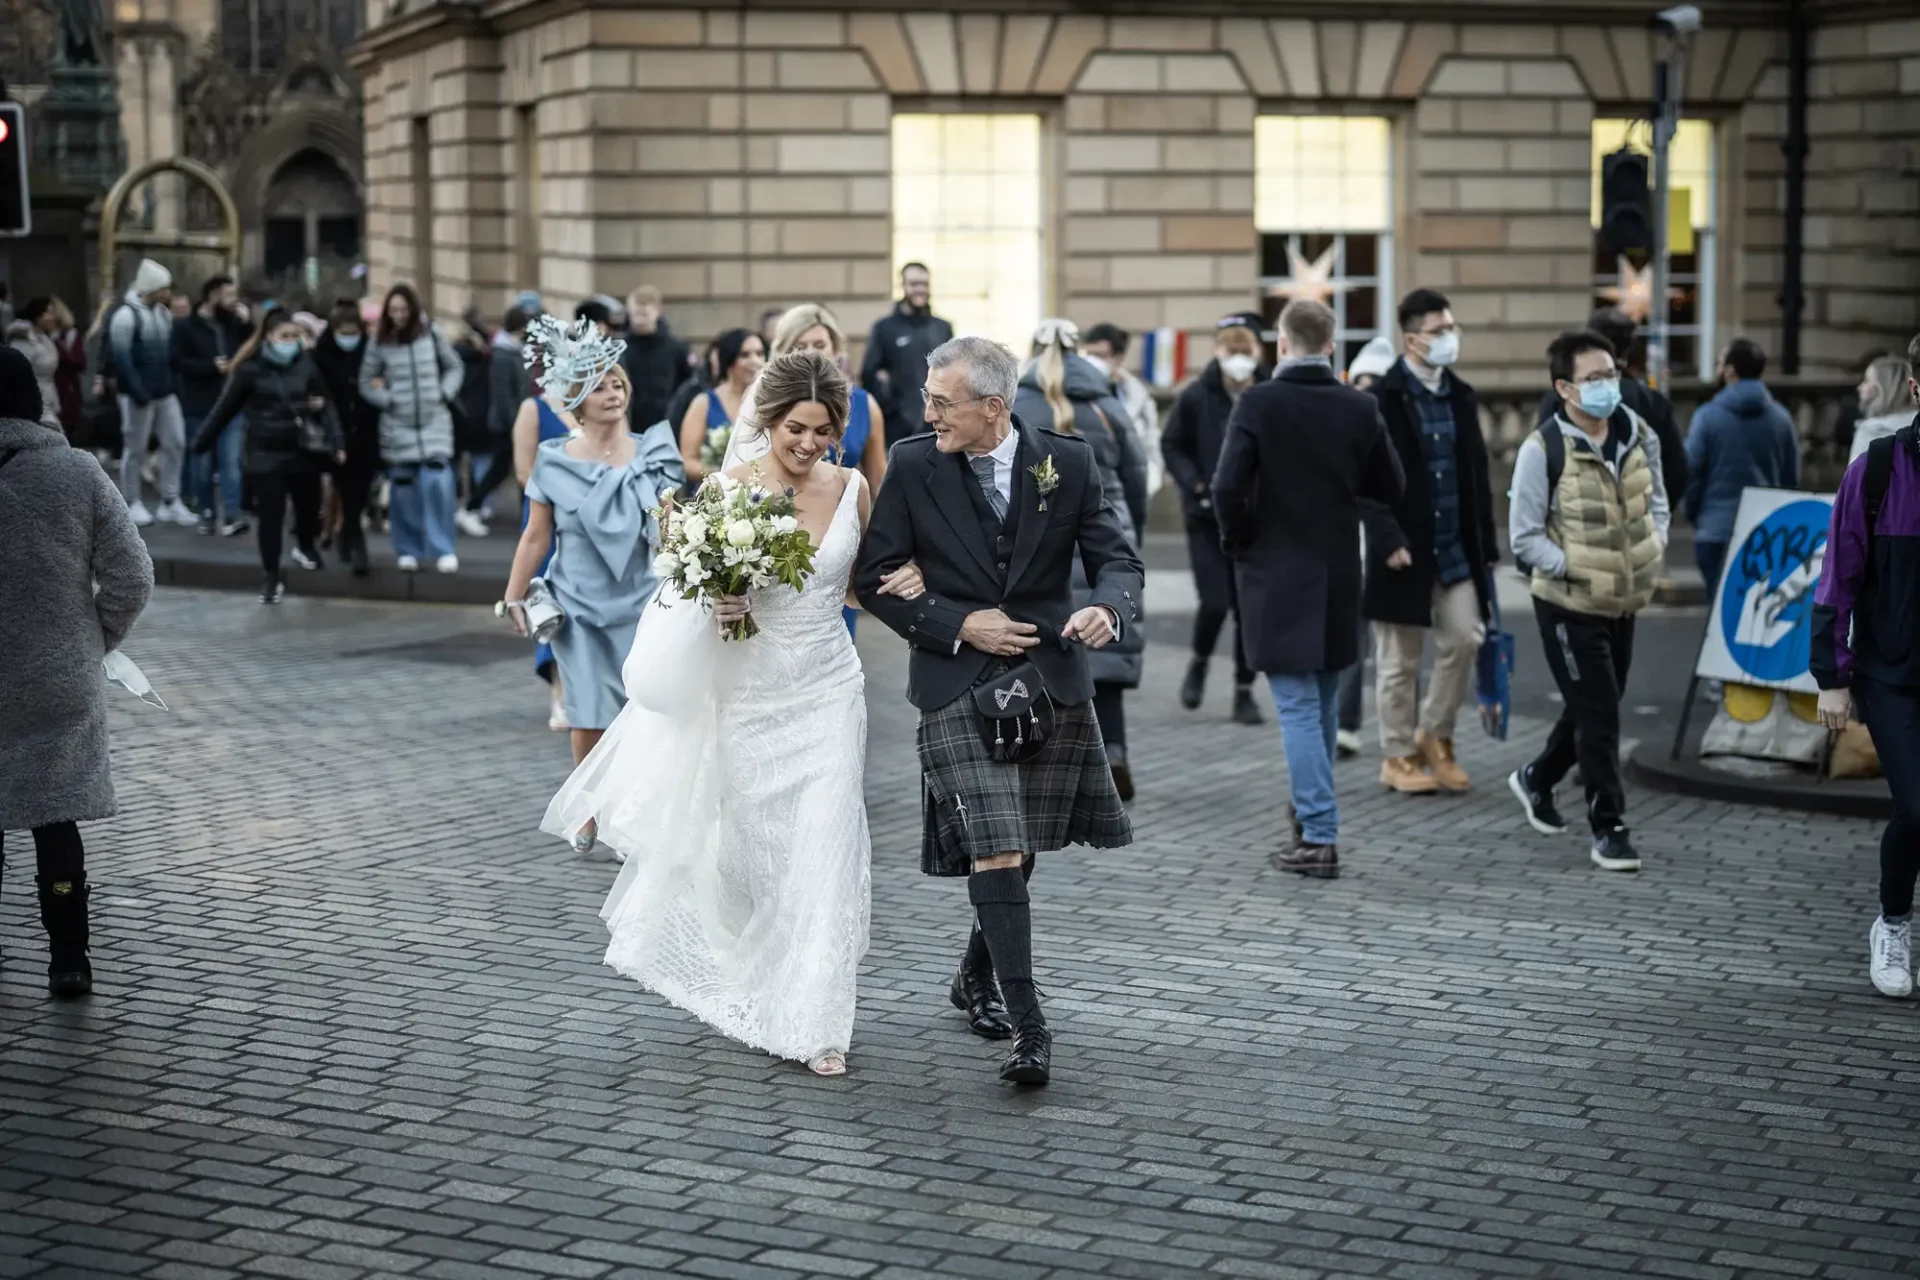 Bride in a white dress and an elderly man in a kilt walking joyfully across a busy street, surrounded by onlookers wearing masks.